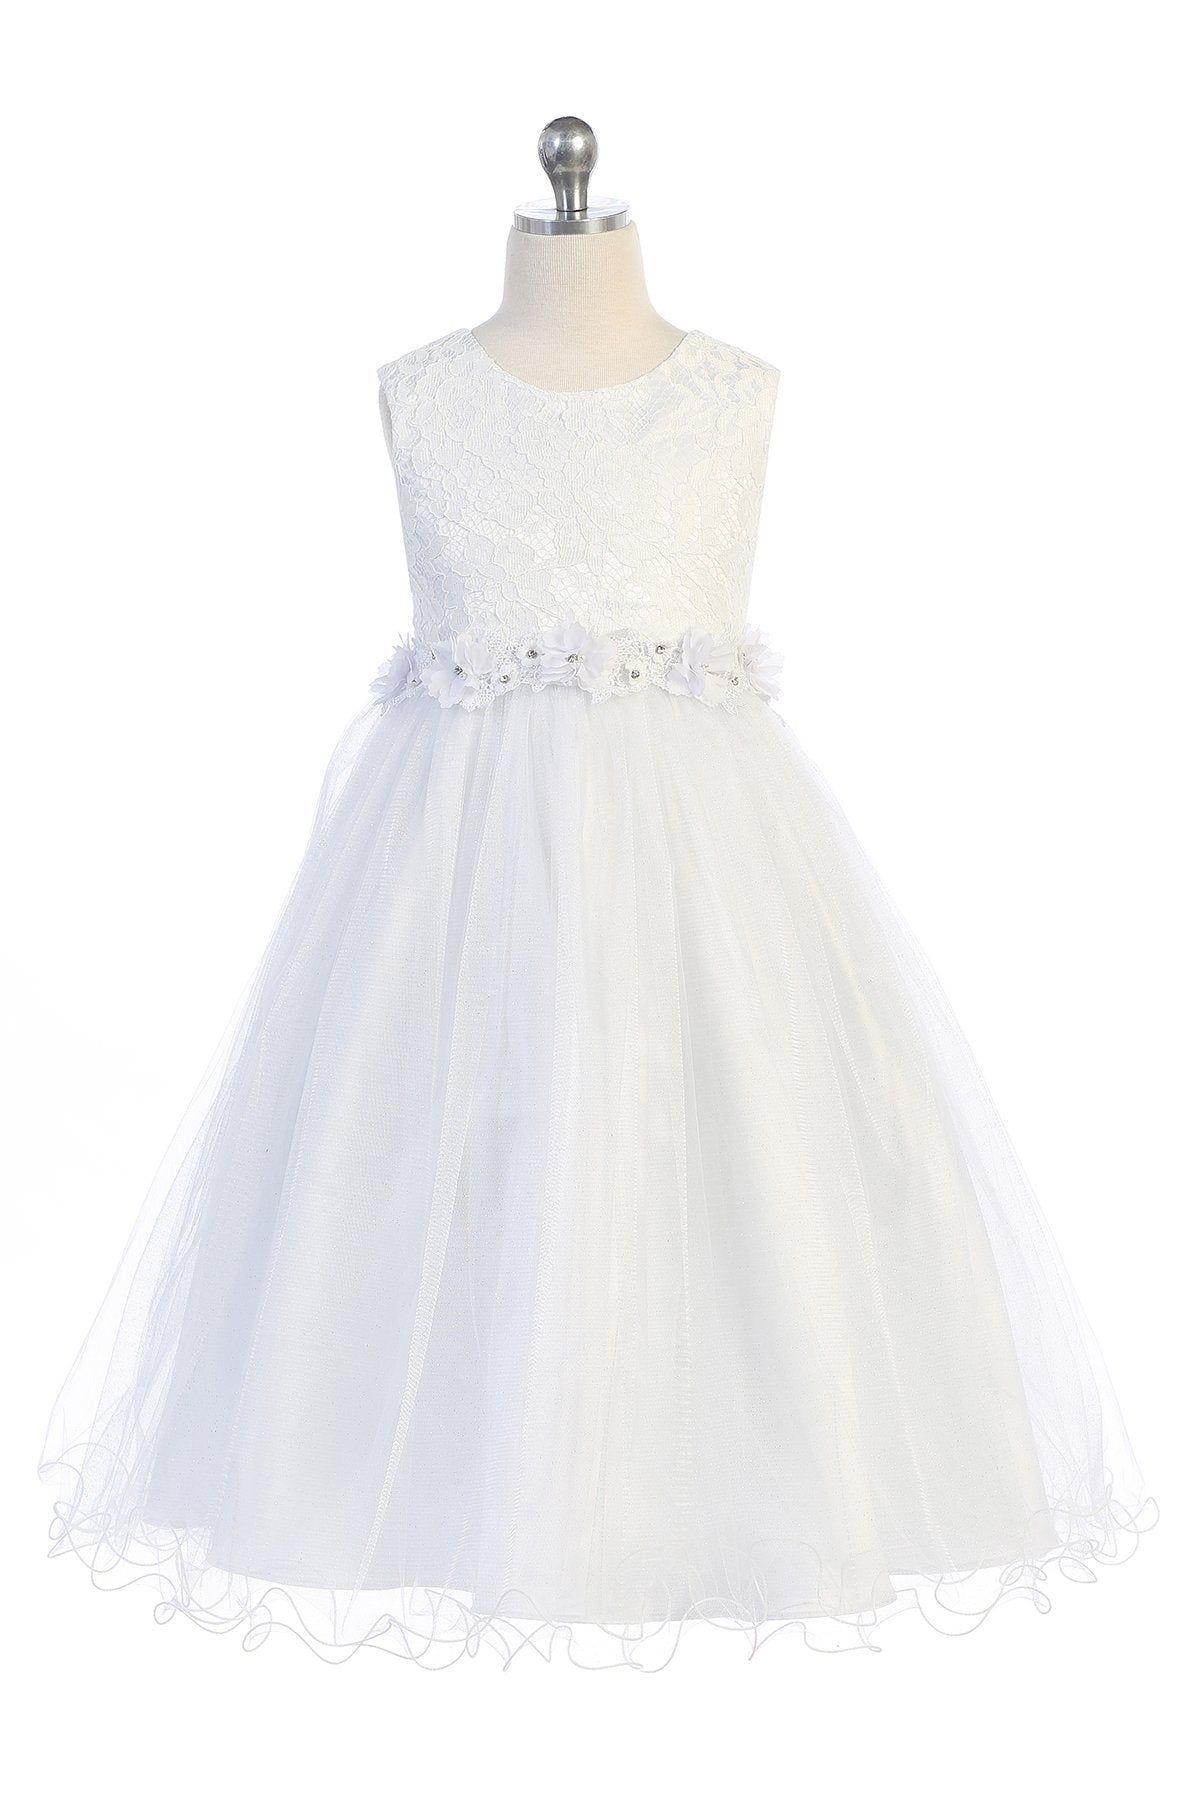 Dress - Lace Glitter Tulle Dress